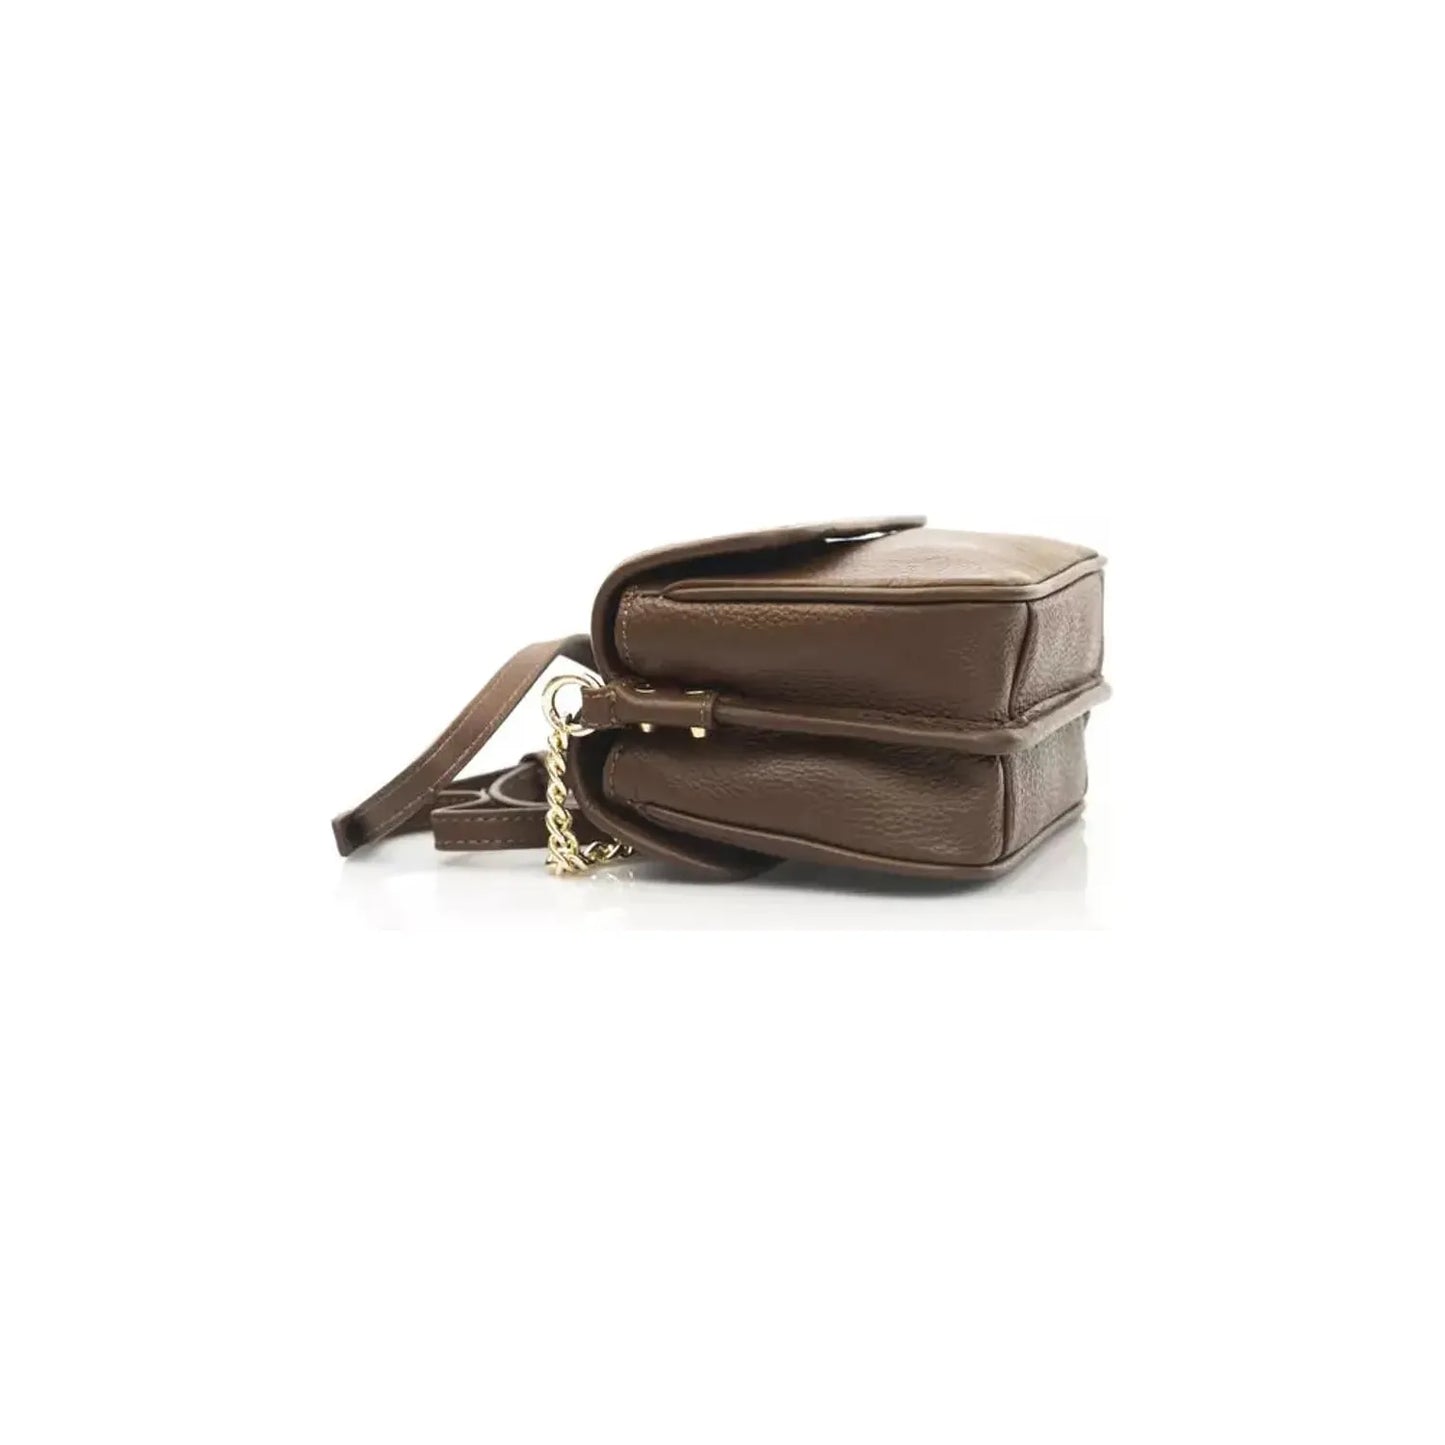 Cerruti 1881 Elegant Double Pocket Leather Crossbody Bag brown-leather-crossbody-bag